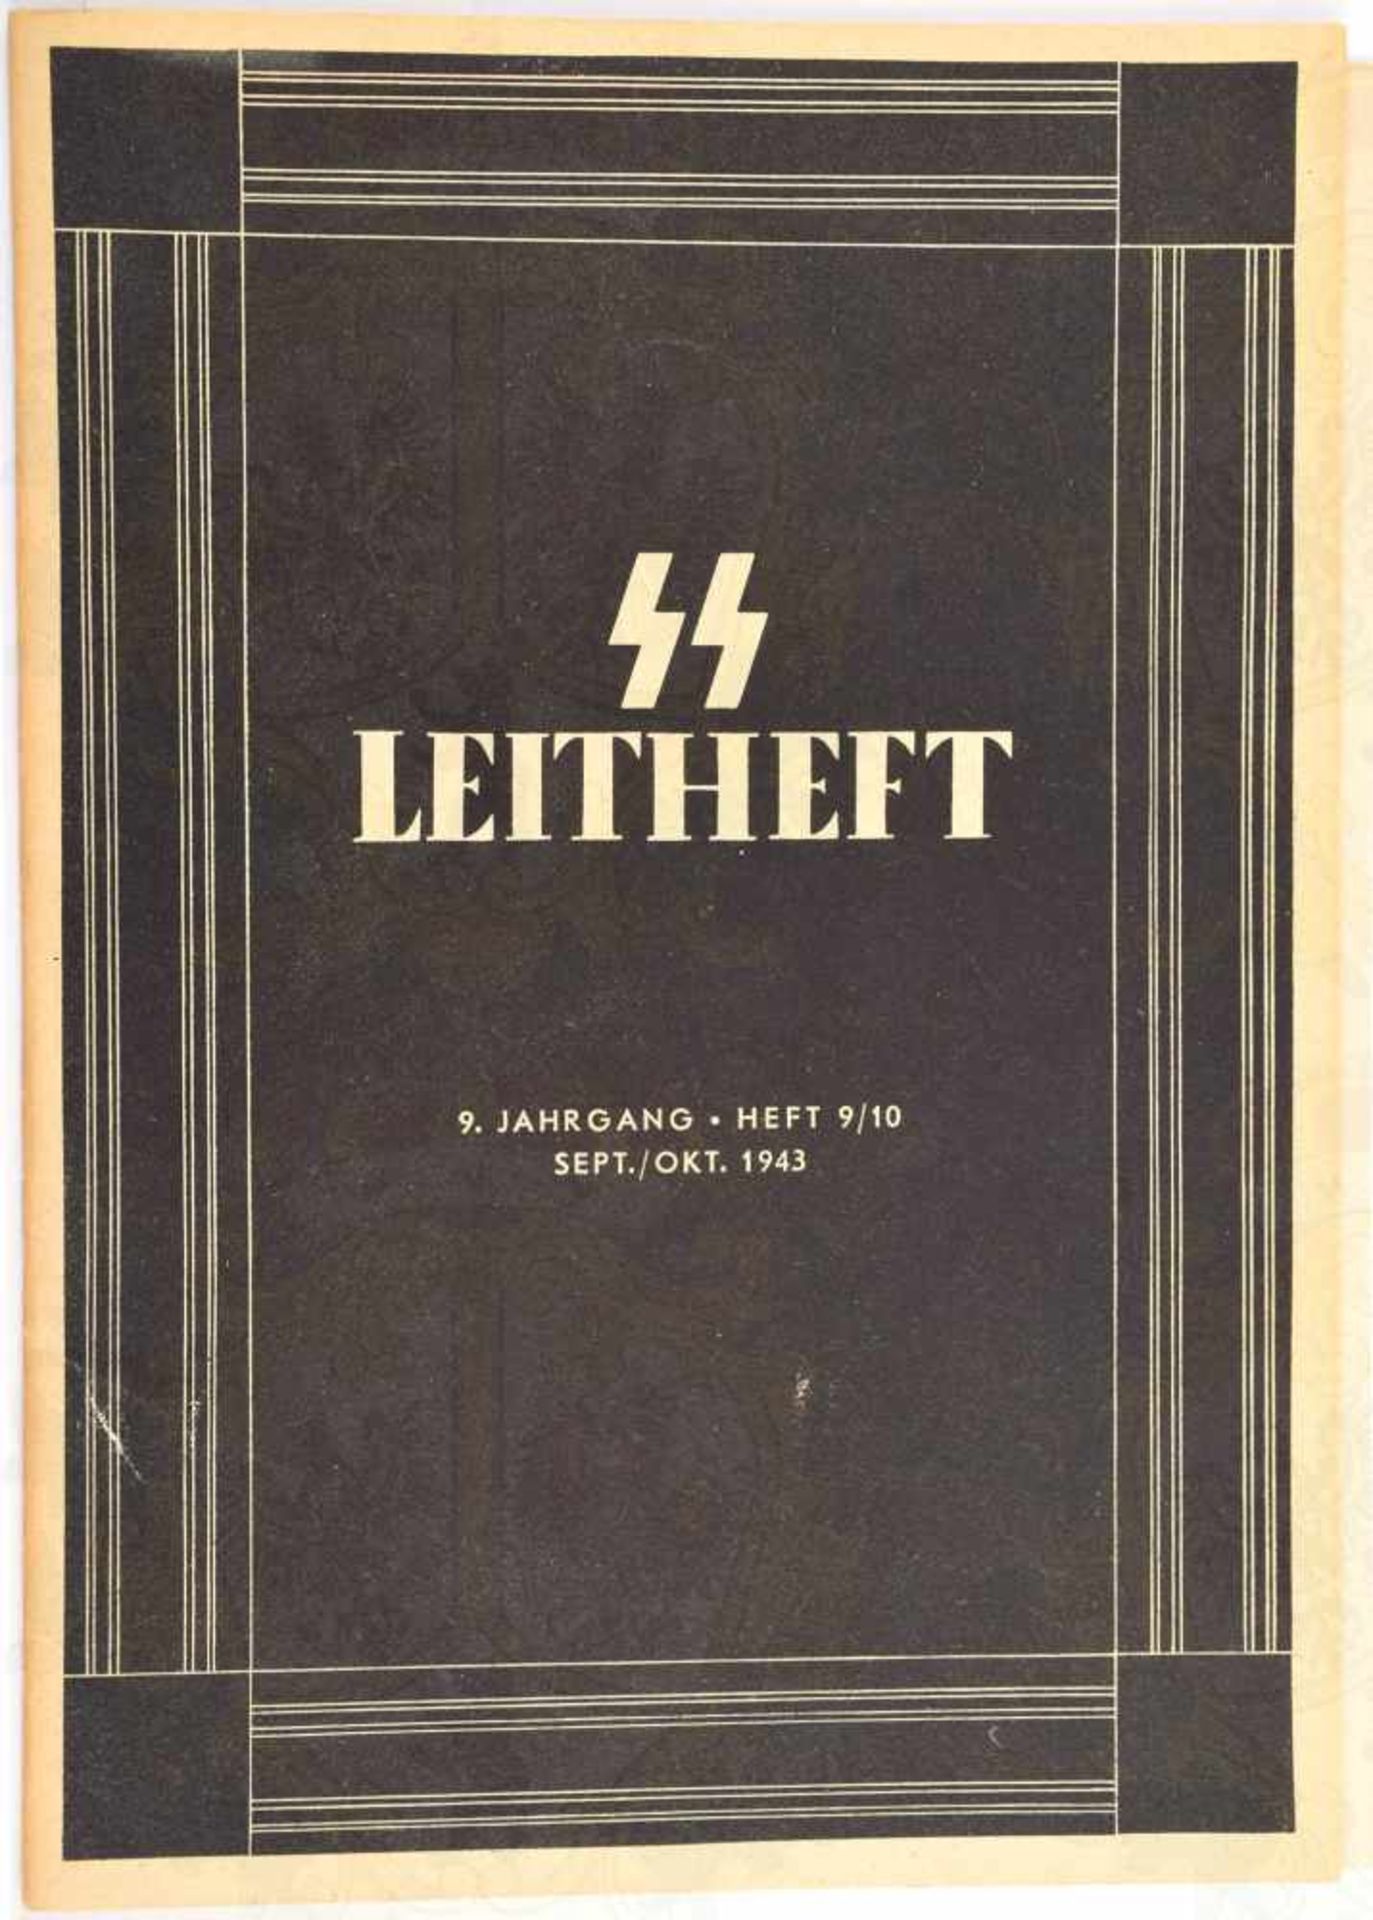 SS-LEITHEFT, Kriegsausgabe, 9. Jahrgang 1943, Nr. 9/10, 32 S., Fotos u. Abb., Portrait